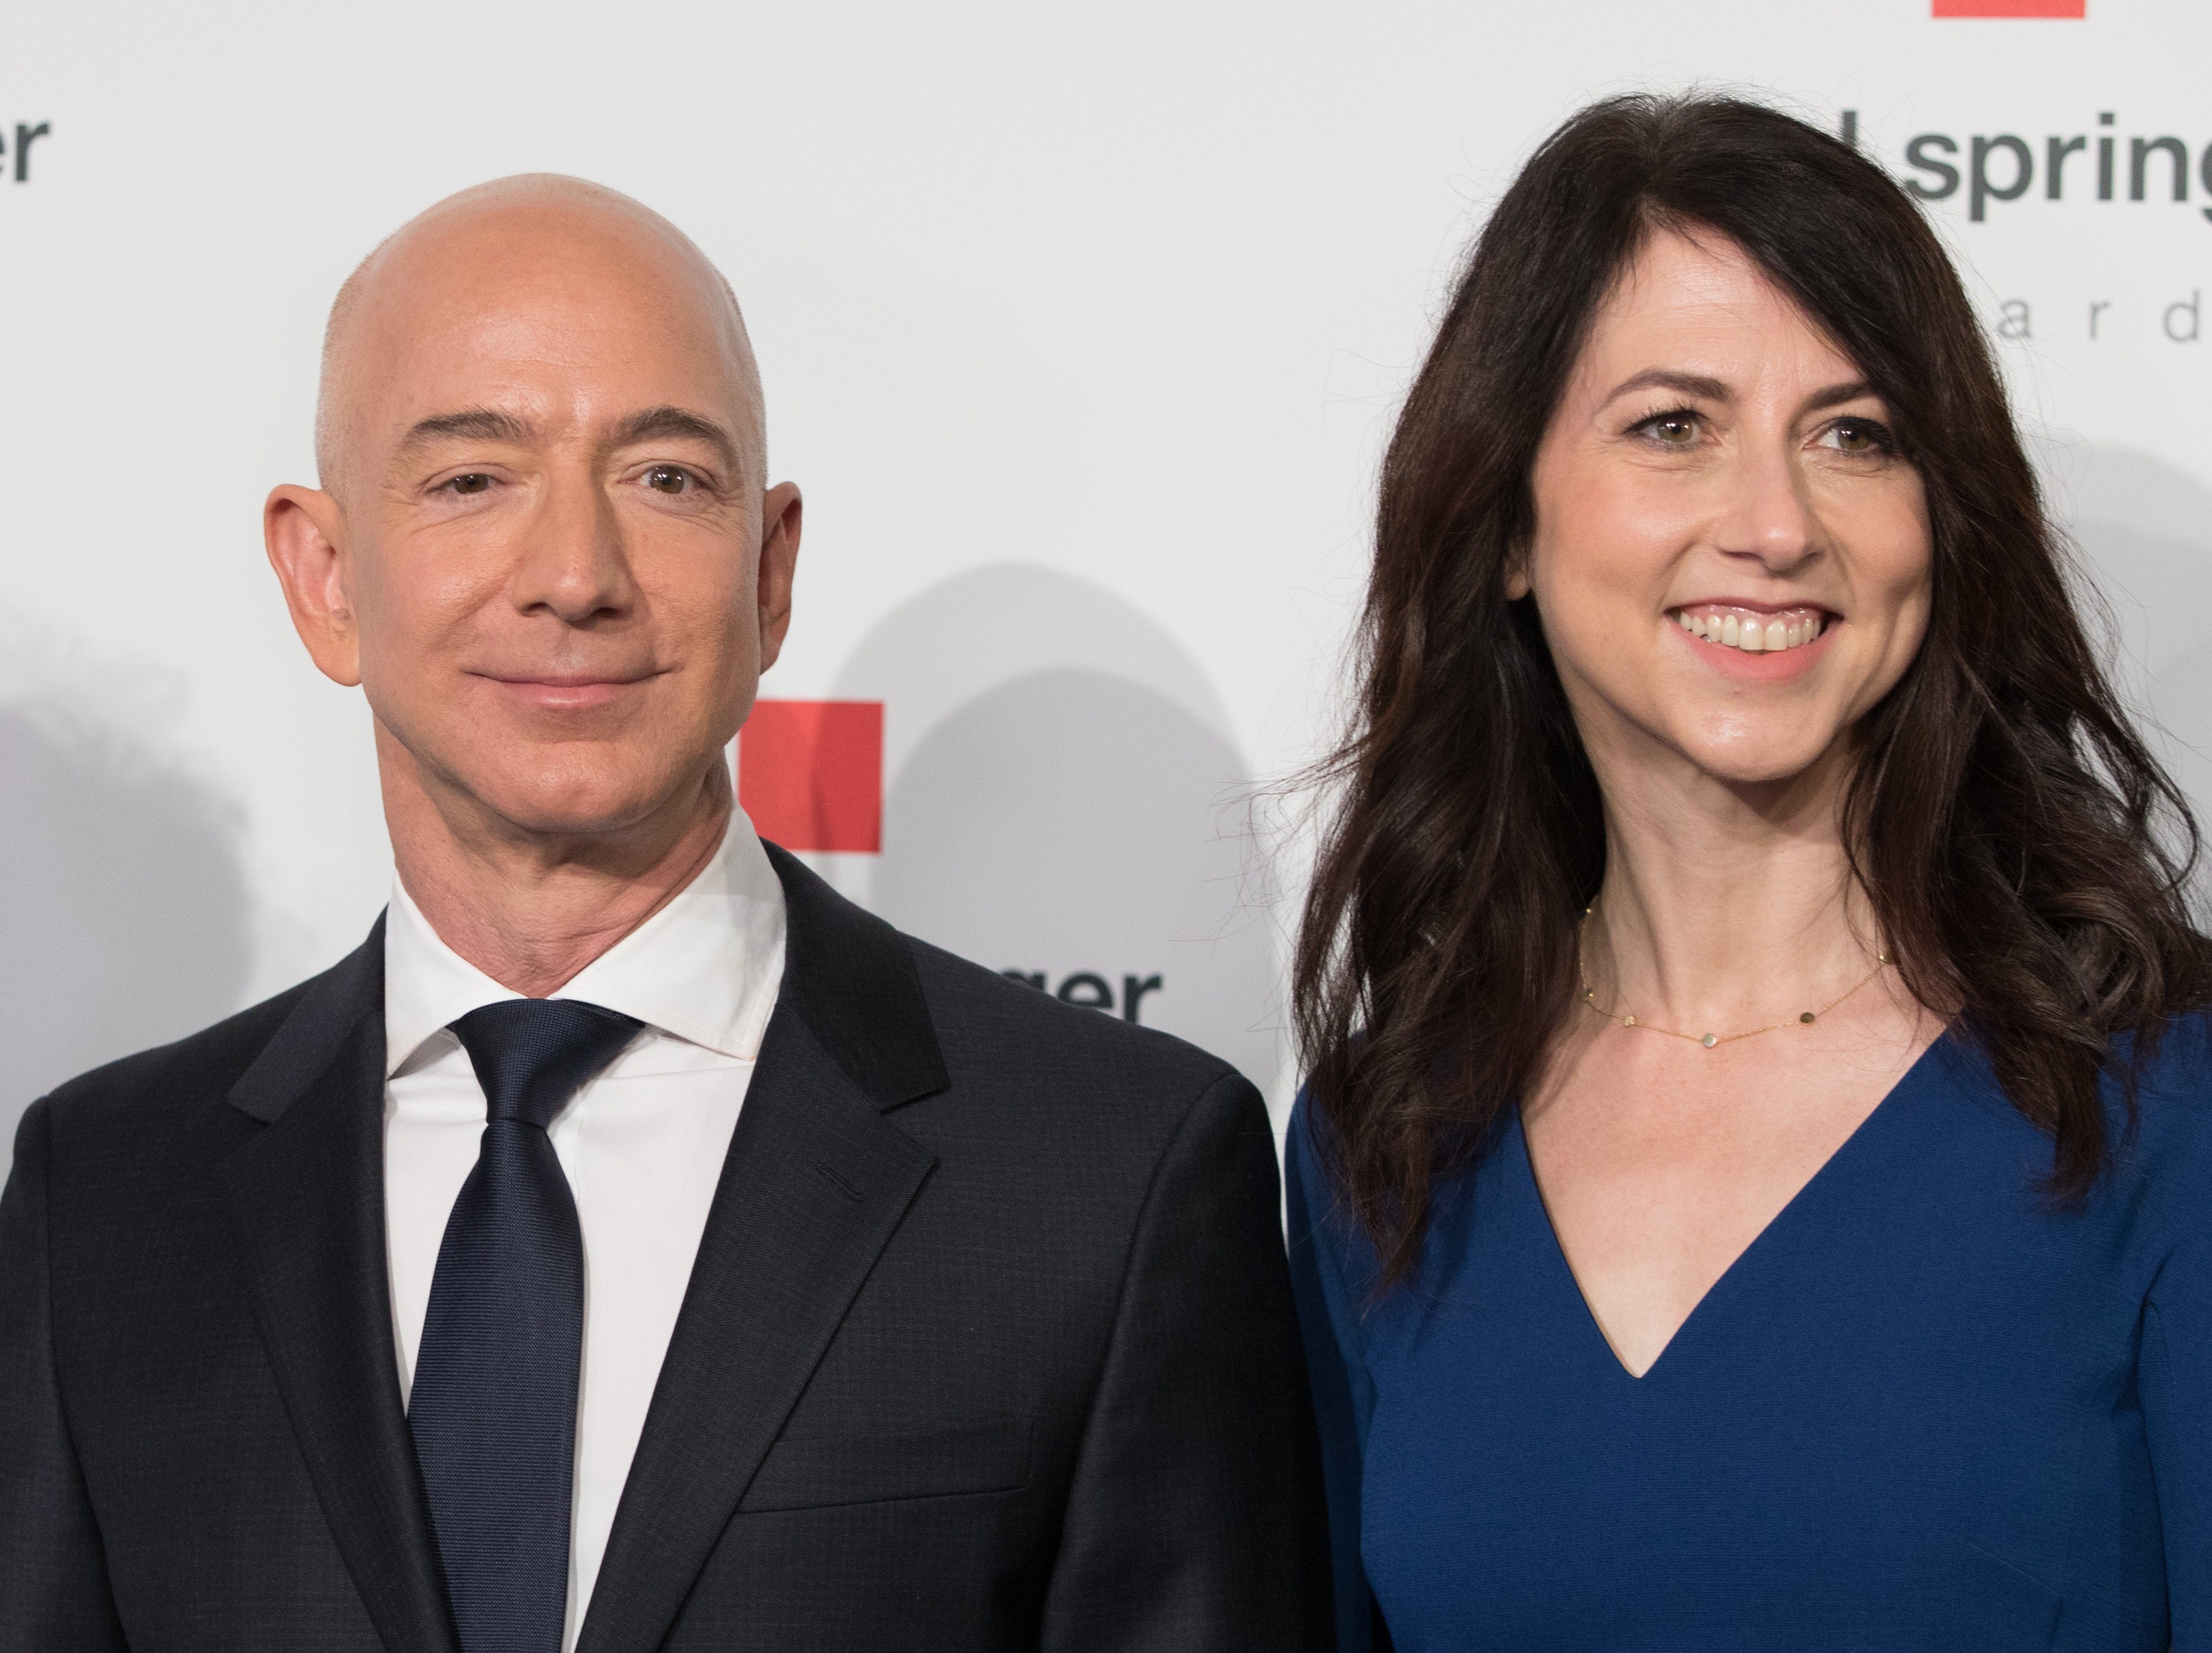 Mackenzie Scott, former wife of Amazon founder Jeff Bezos, recently gave Philadelphia nonprofit Benefits Data Trust a no-strings $20 million gift picture